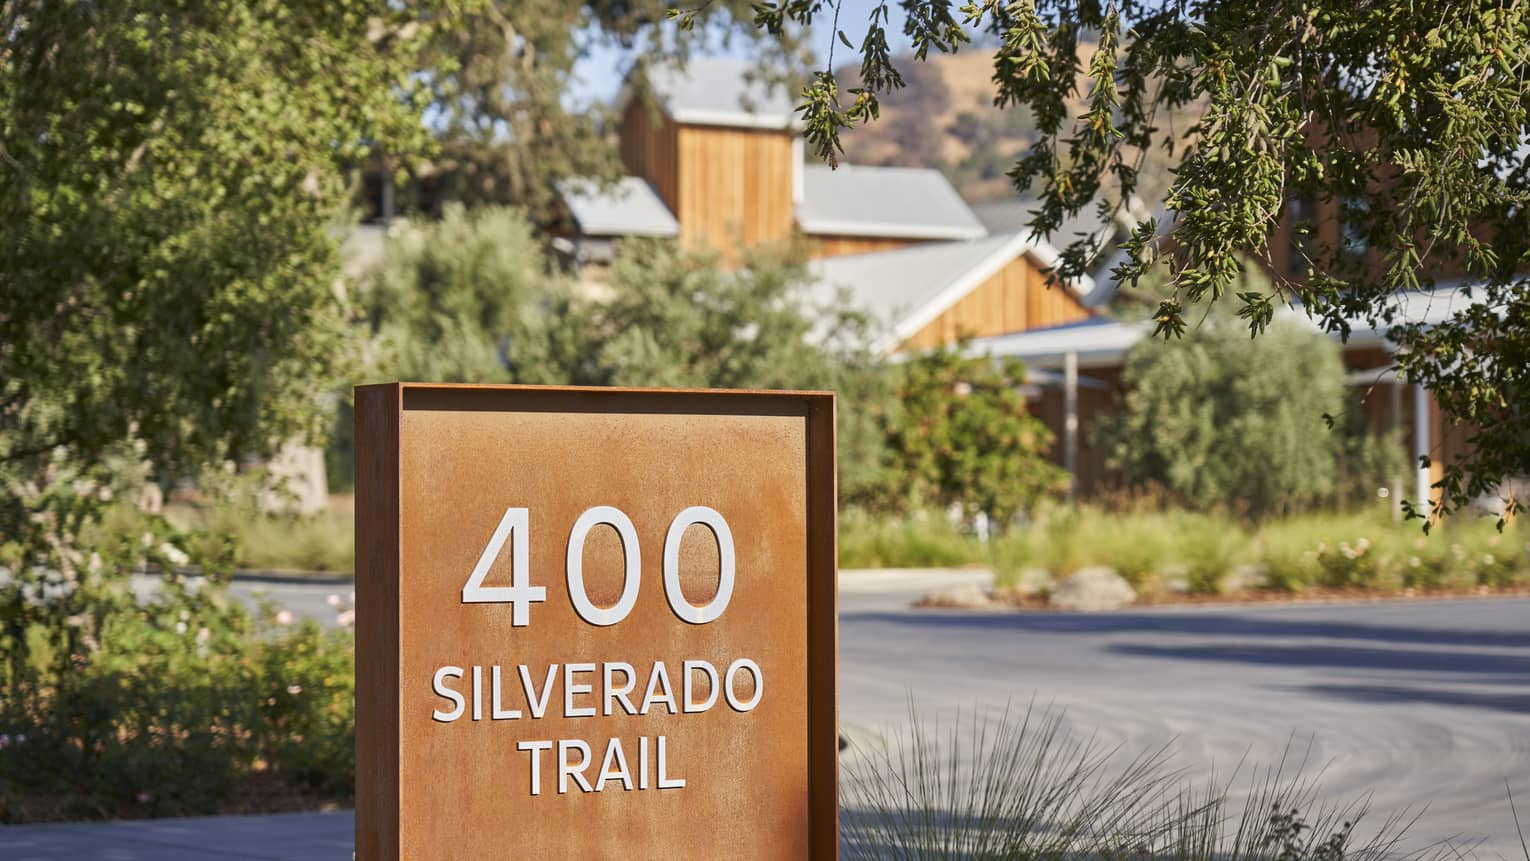 A street sign that says "400 Silverado Trail."